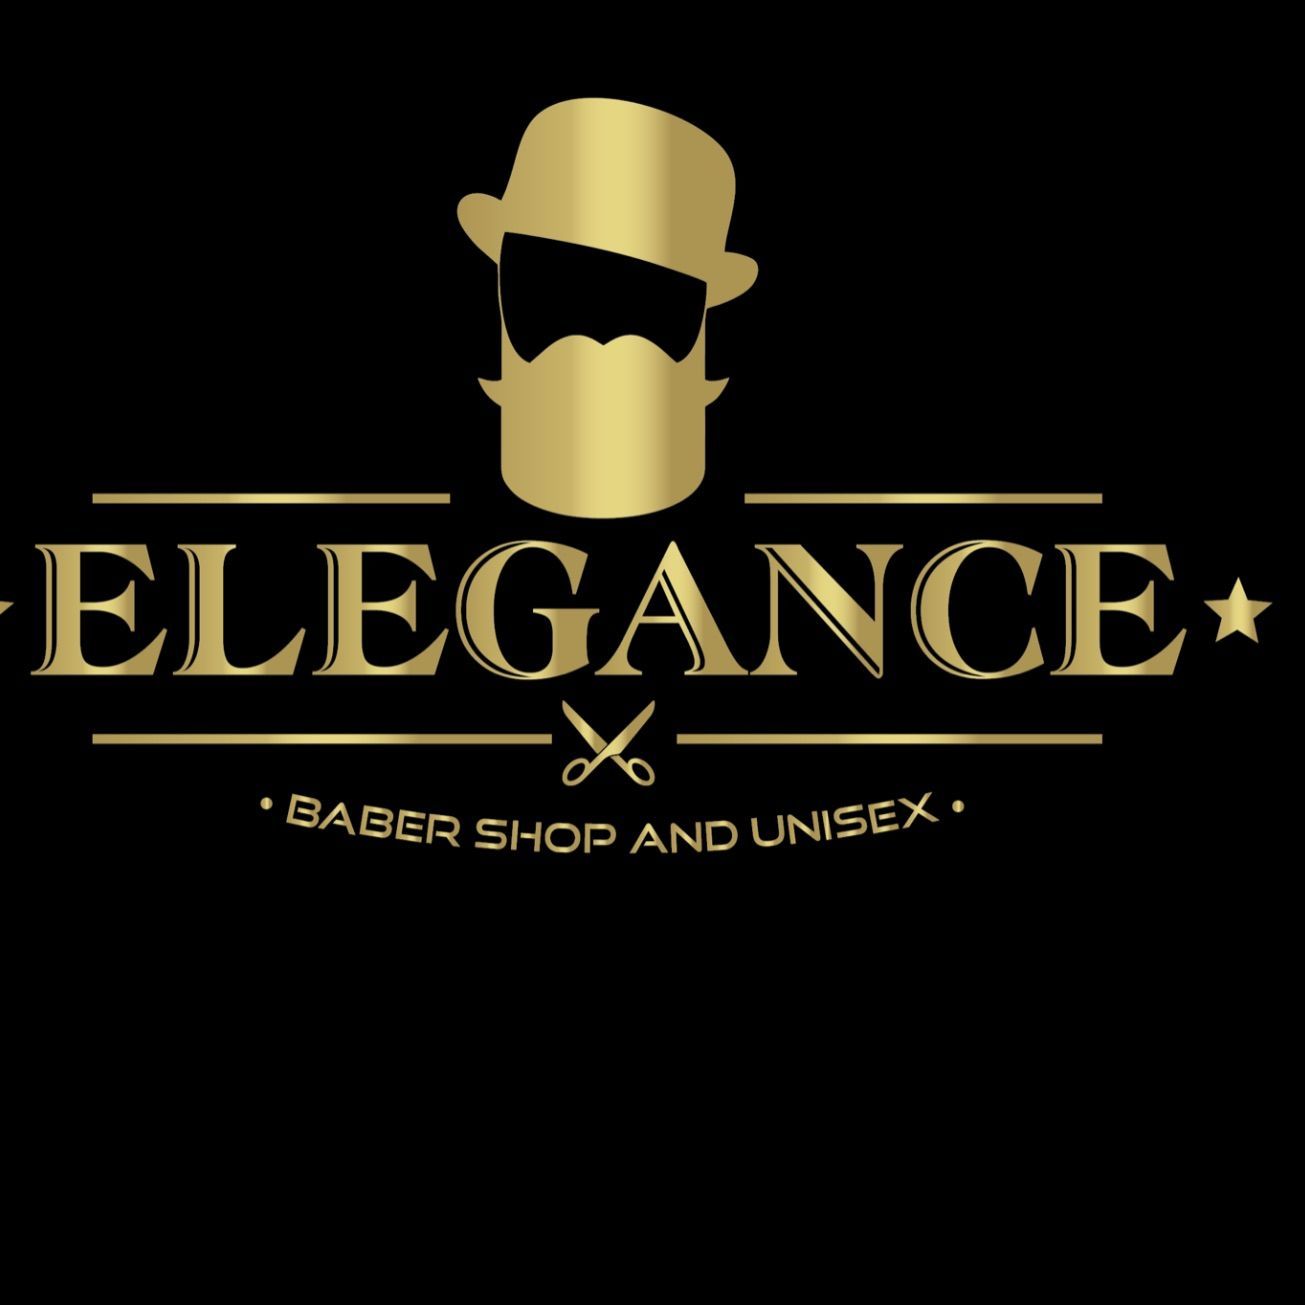 Elegance Barber Shop And Unisex, 6506 Bergenline Avenue, West New York, 07093